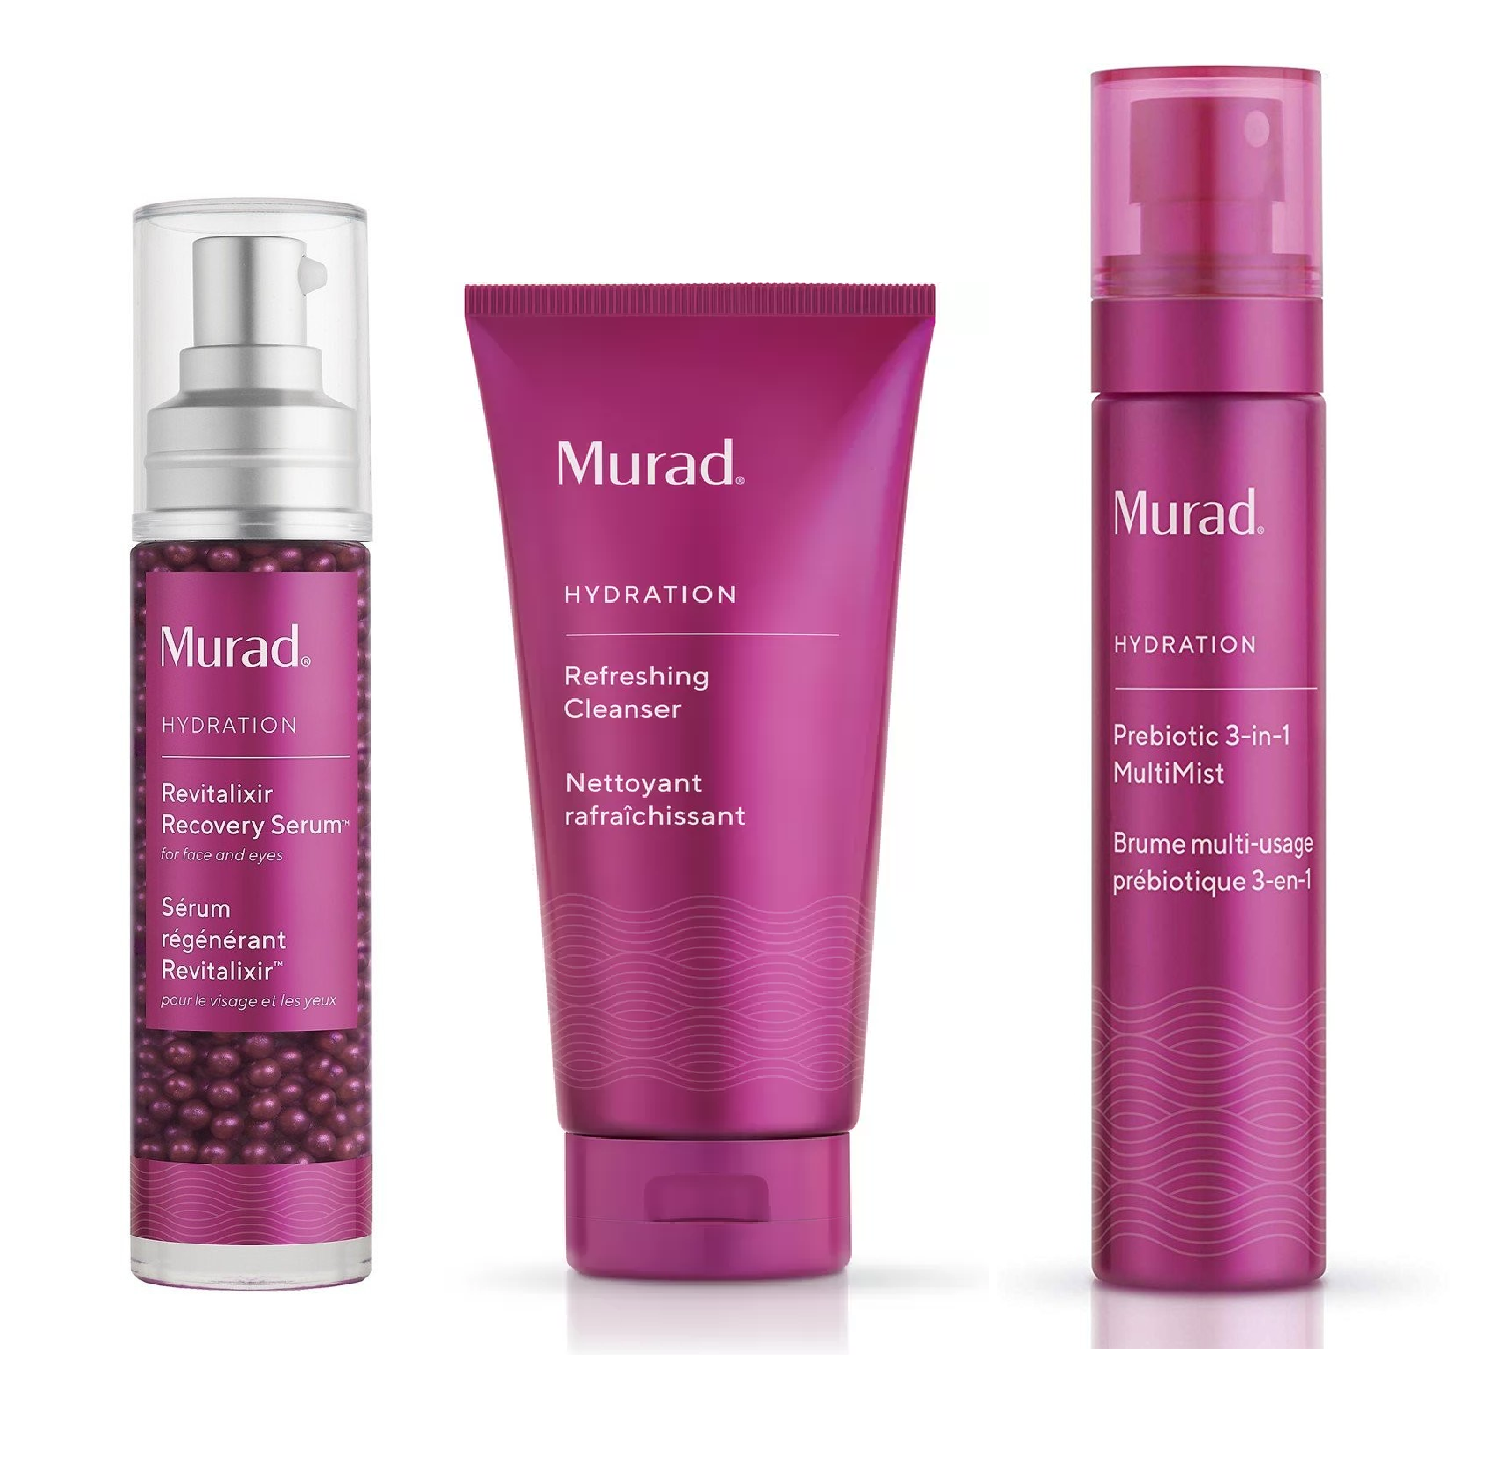 Murad - Hydration Revitalixir Recovery Serum 40 ml + Murad - Hydration Refreshing Cleanser 200 ml + Murad - Prebiotic 3-in-1 M..